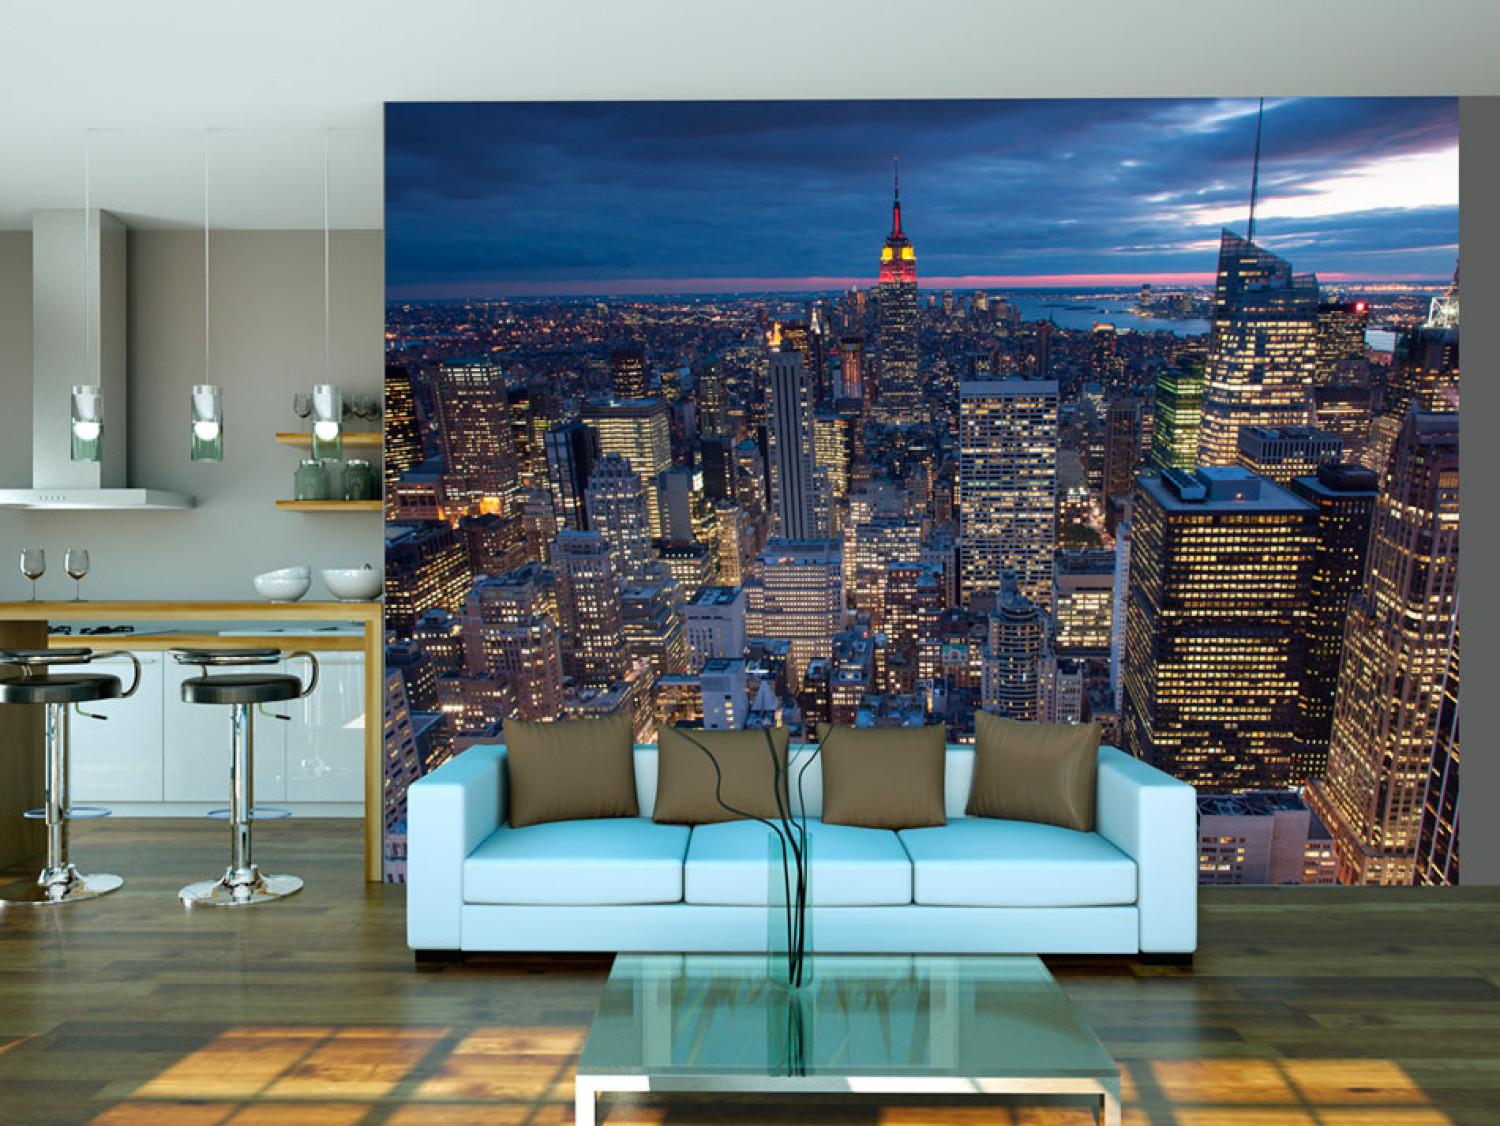 Fotomural decorativo Nueva York - Panorama urbano con rascacielos iluminados en Manhattan